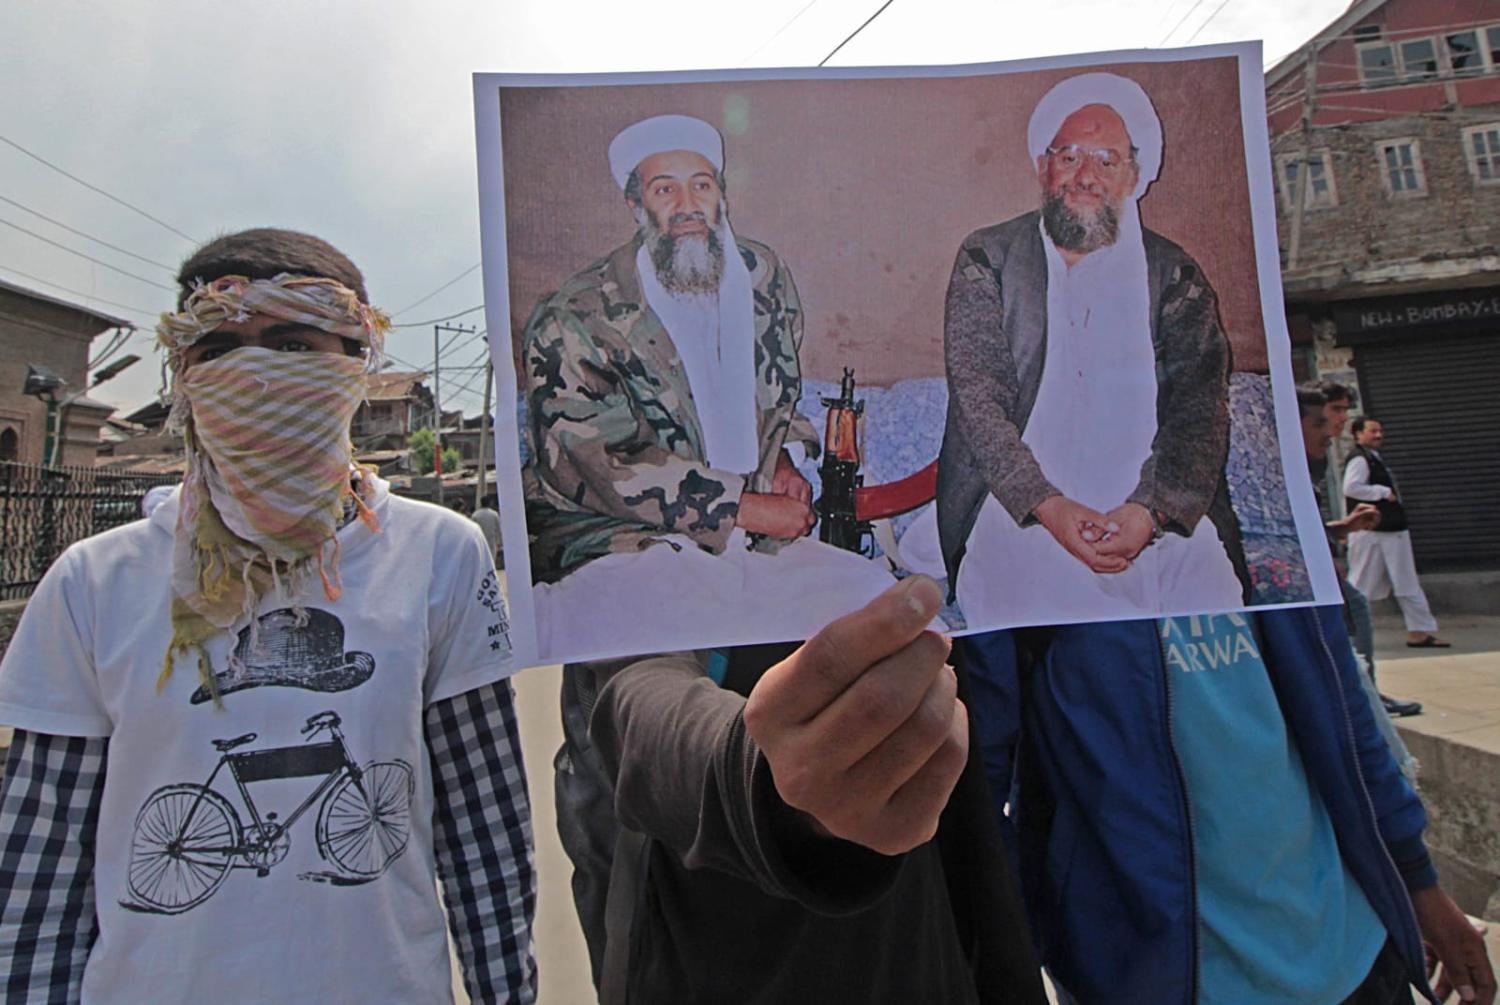 Protesters displaying a photo of Osama Bin Laden and Ayman al-Zawahiri during a demonstration in Srinagar, India (Faisal Khan via Getty Images)